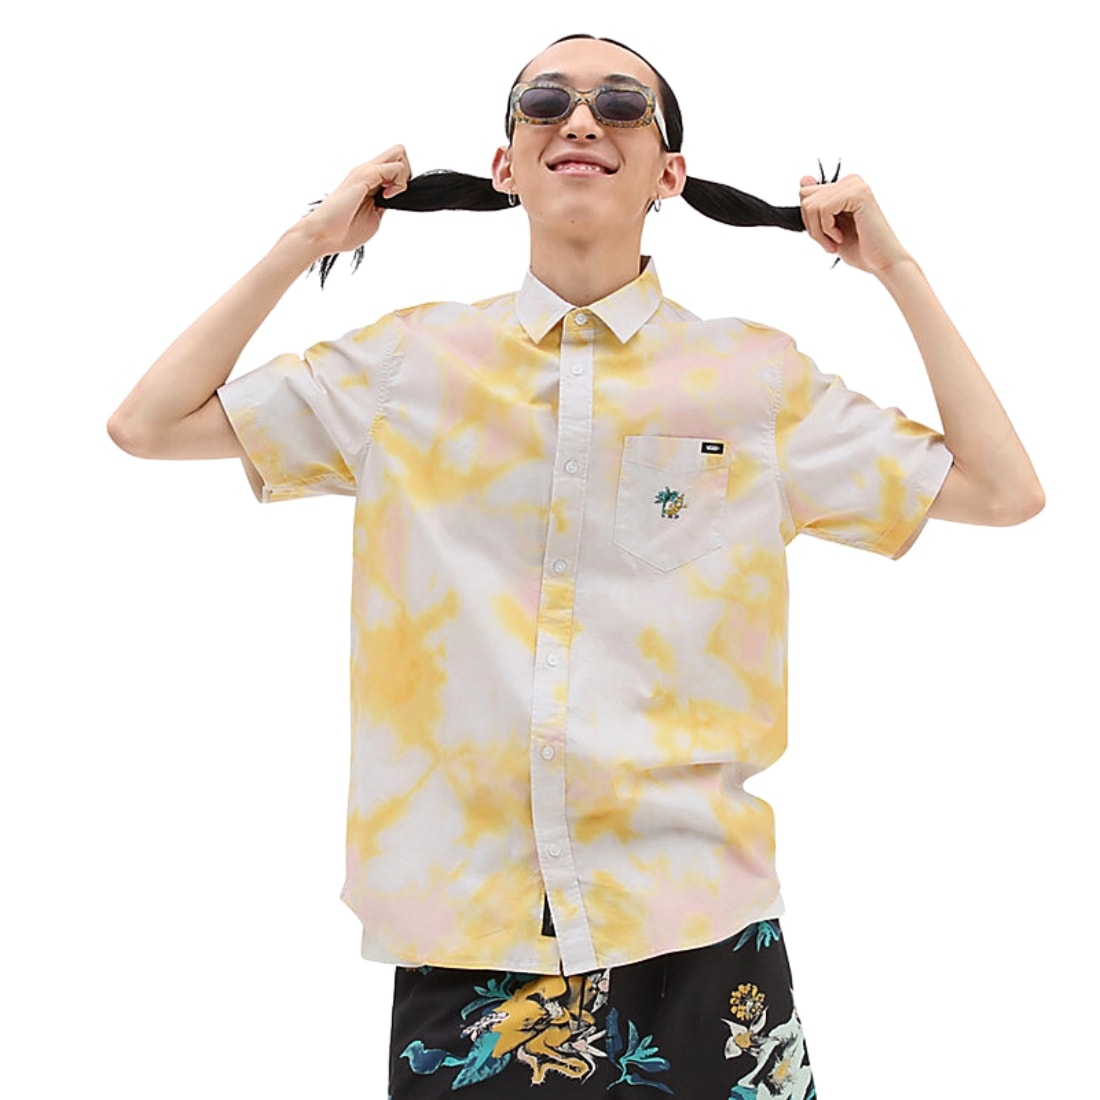 Vans Carlson Tie Dye Shirt - Narcissus